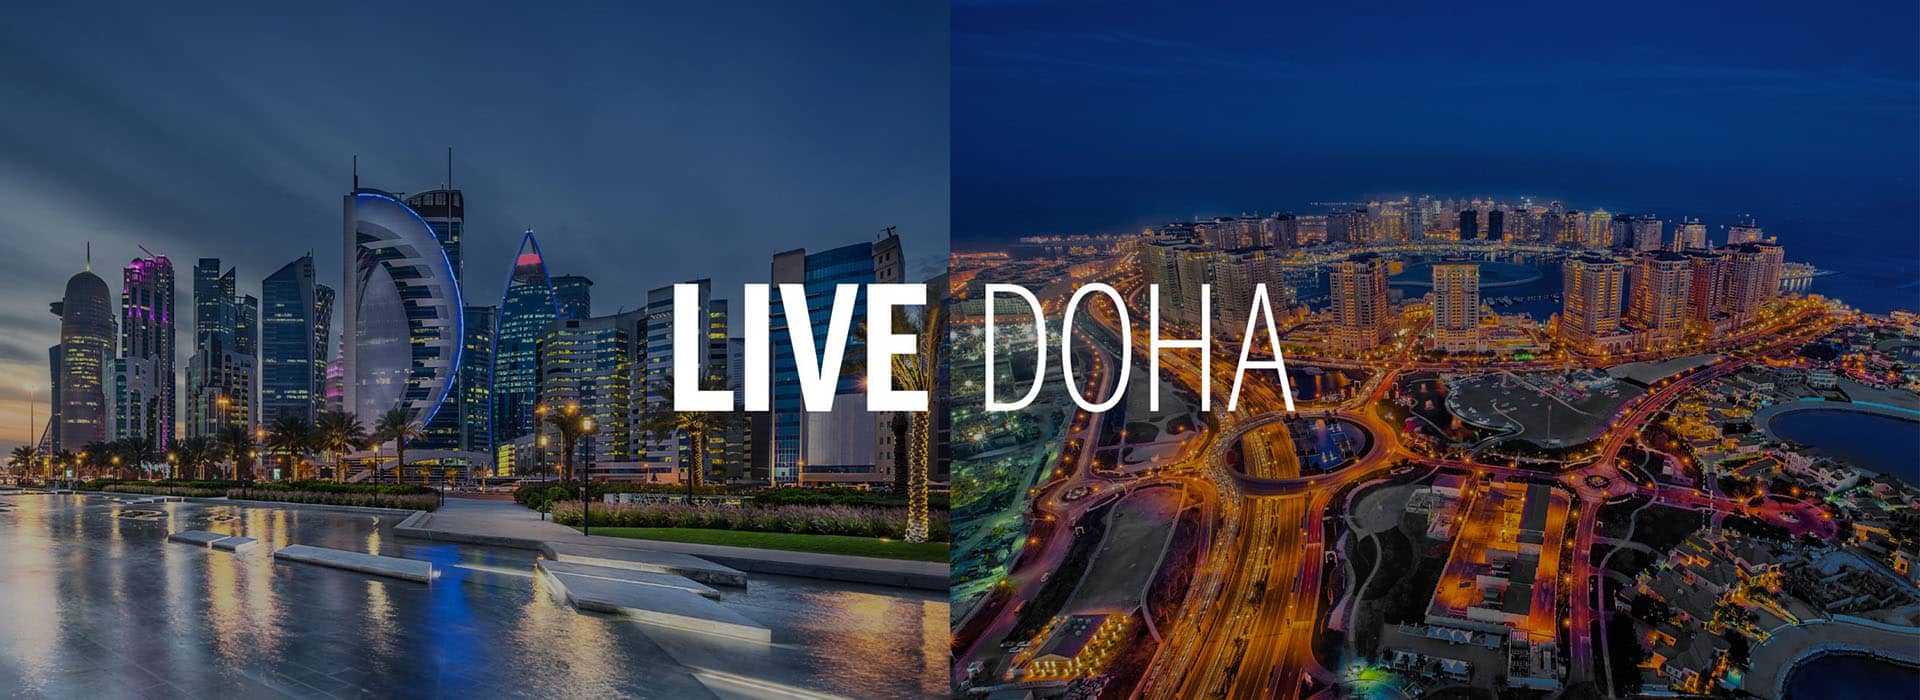 qatar sotheby live doha image